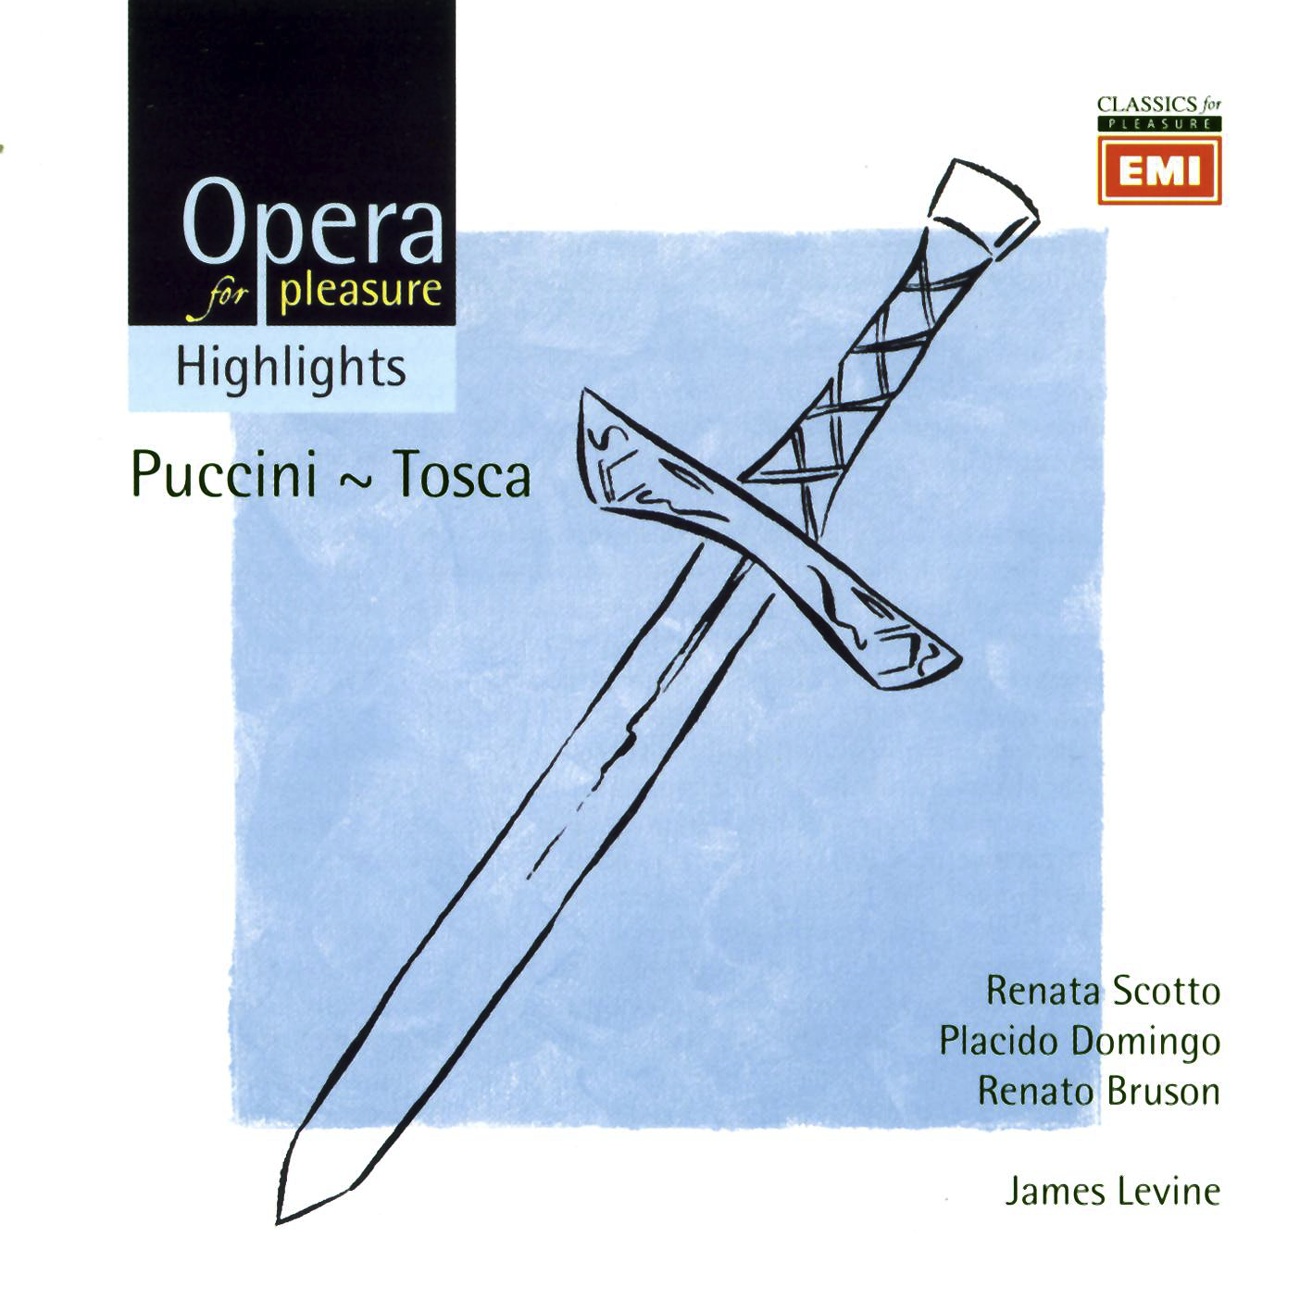 Tosca - Opera in three acts (1997 Digital Remaster), Act I: Tre sbirri, una carrozza (Scarpia, Spoletta, Congregation, Attendant